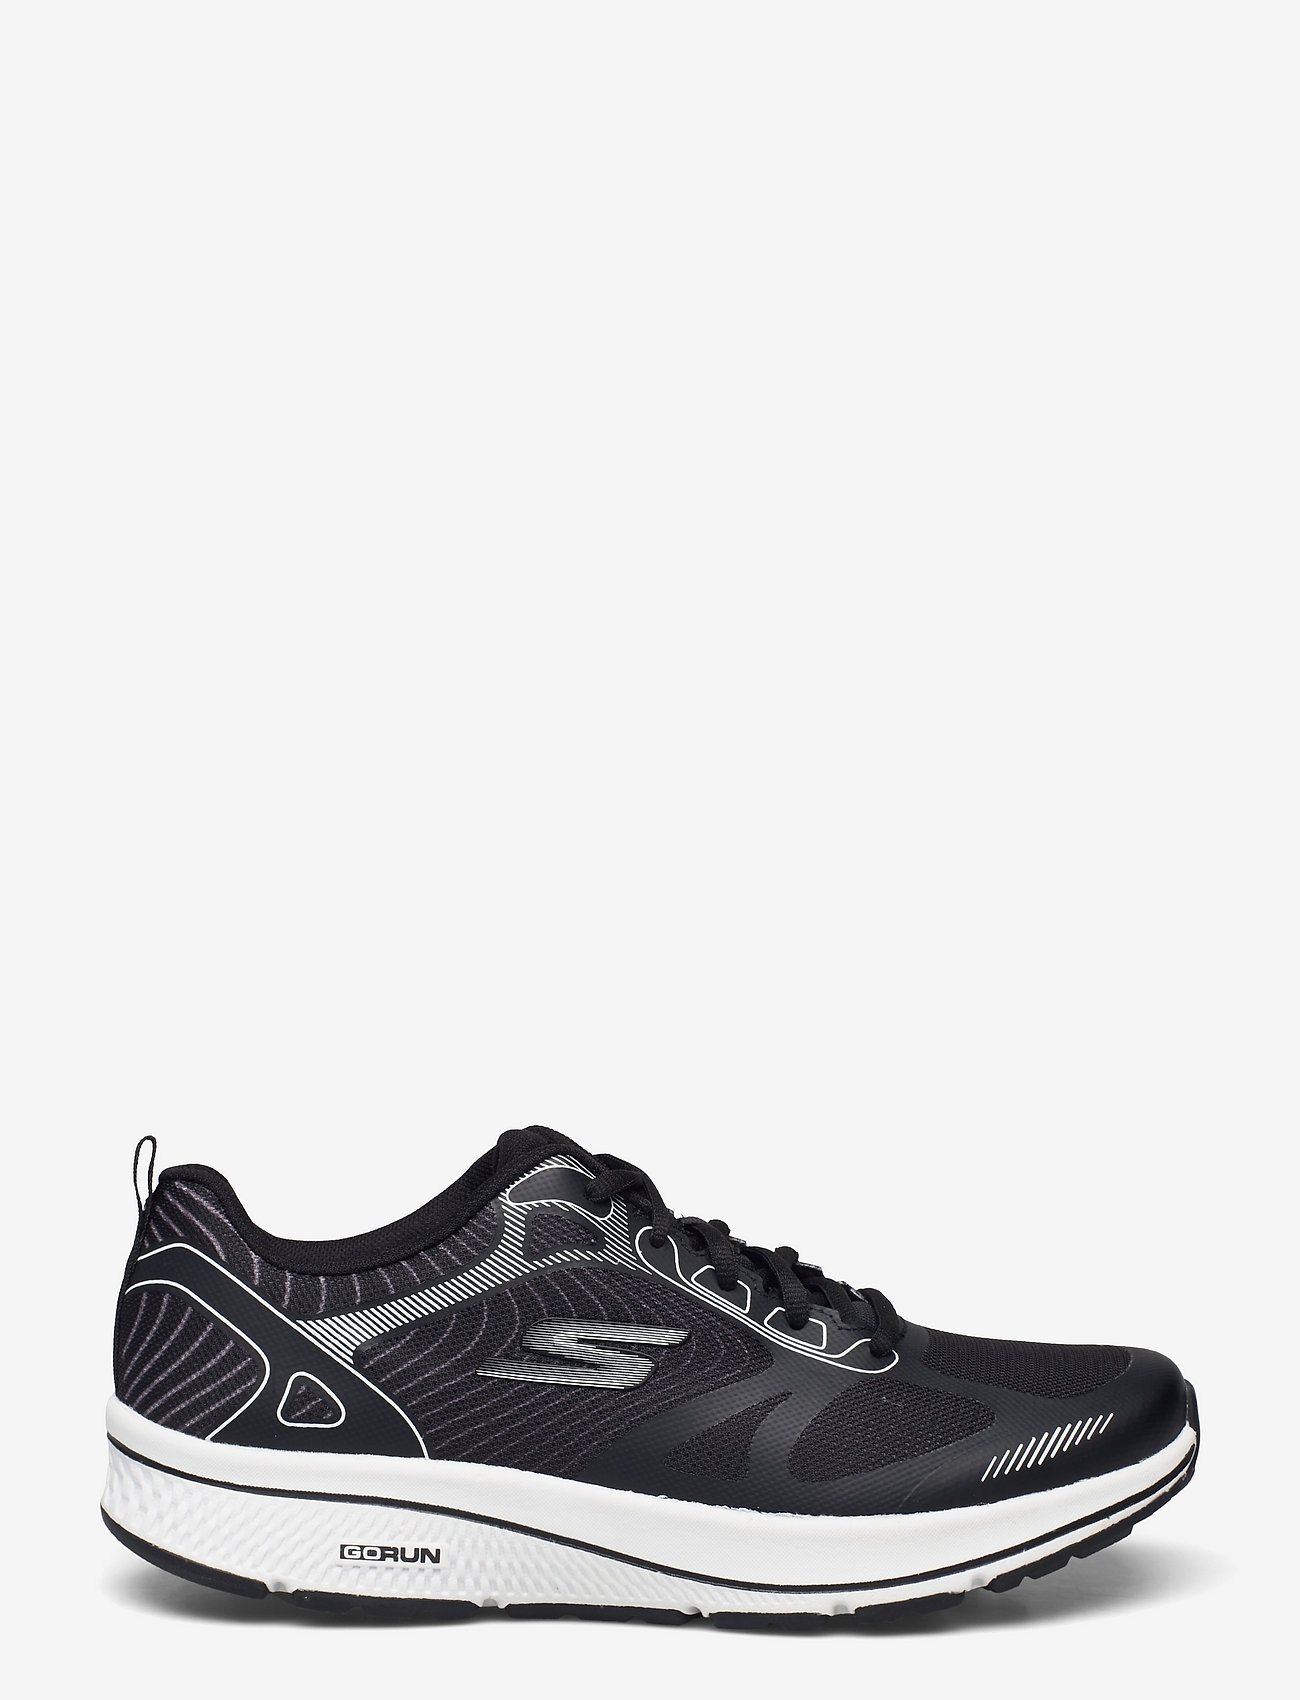 Skechers - Mens GOrun Consistent - Fleet Rush - running shoes - bkw black white - 1